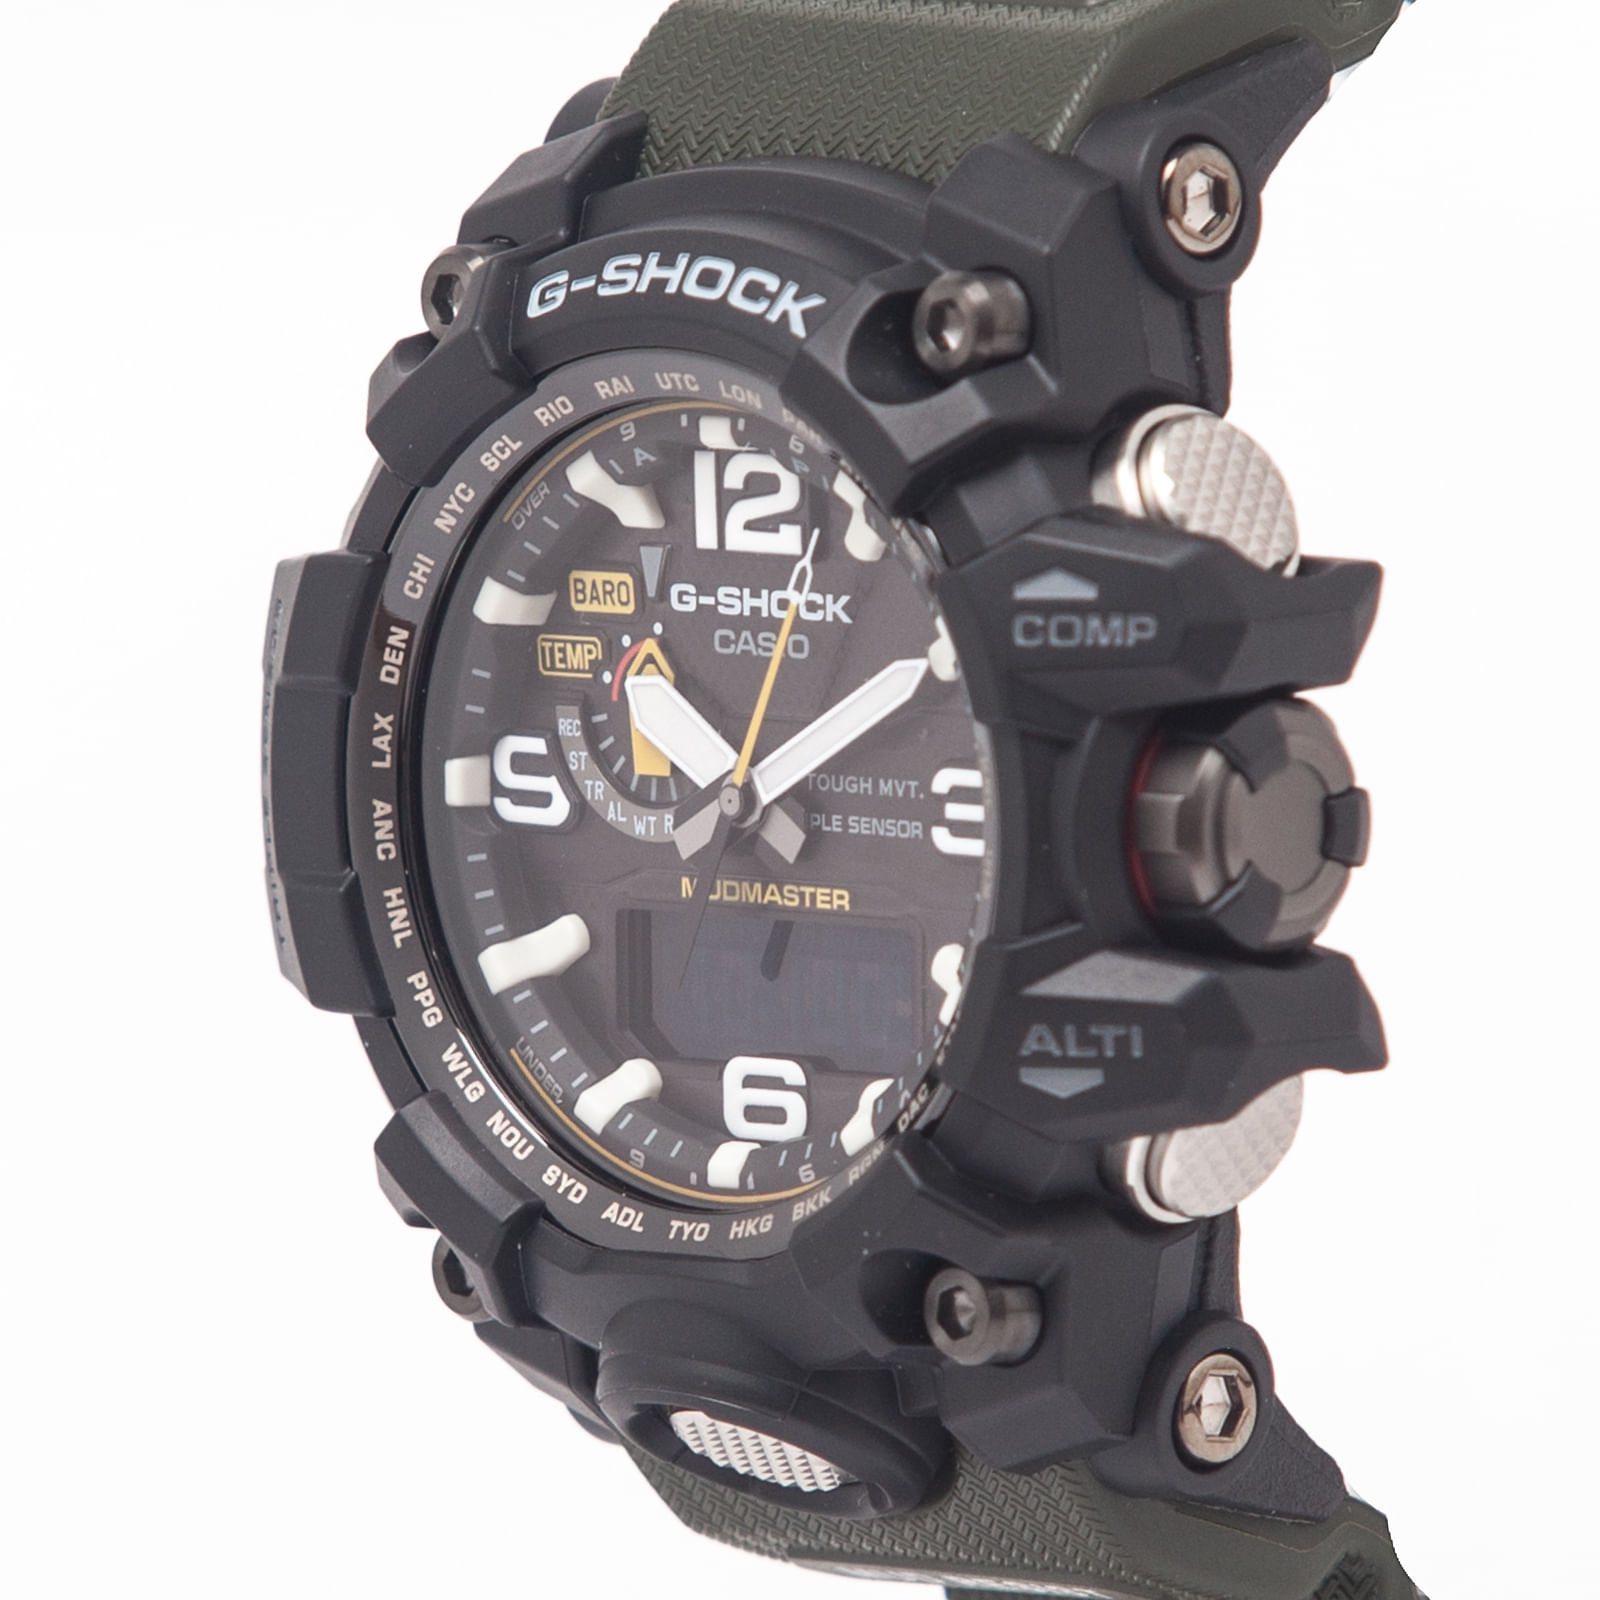 Reloj G-SHOCK GWG-1000-1A3 Resina/Acero Hombre Negro